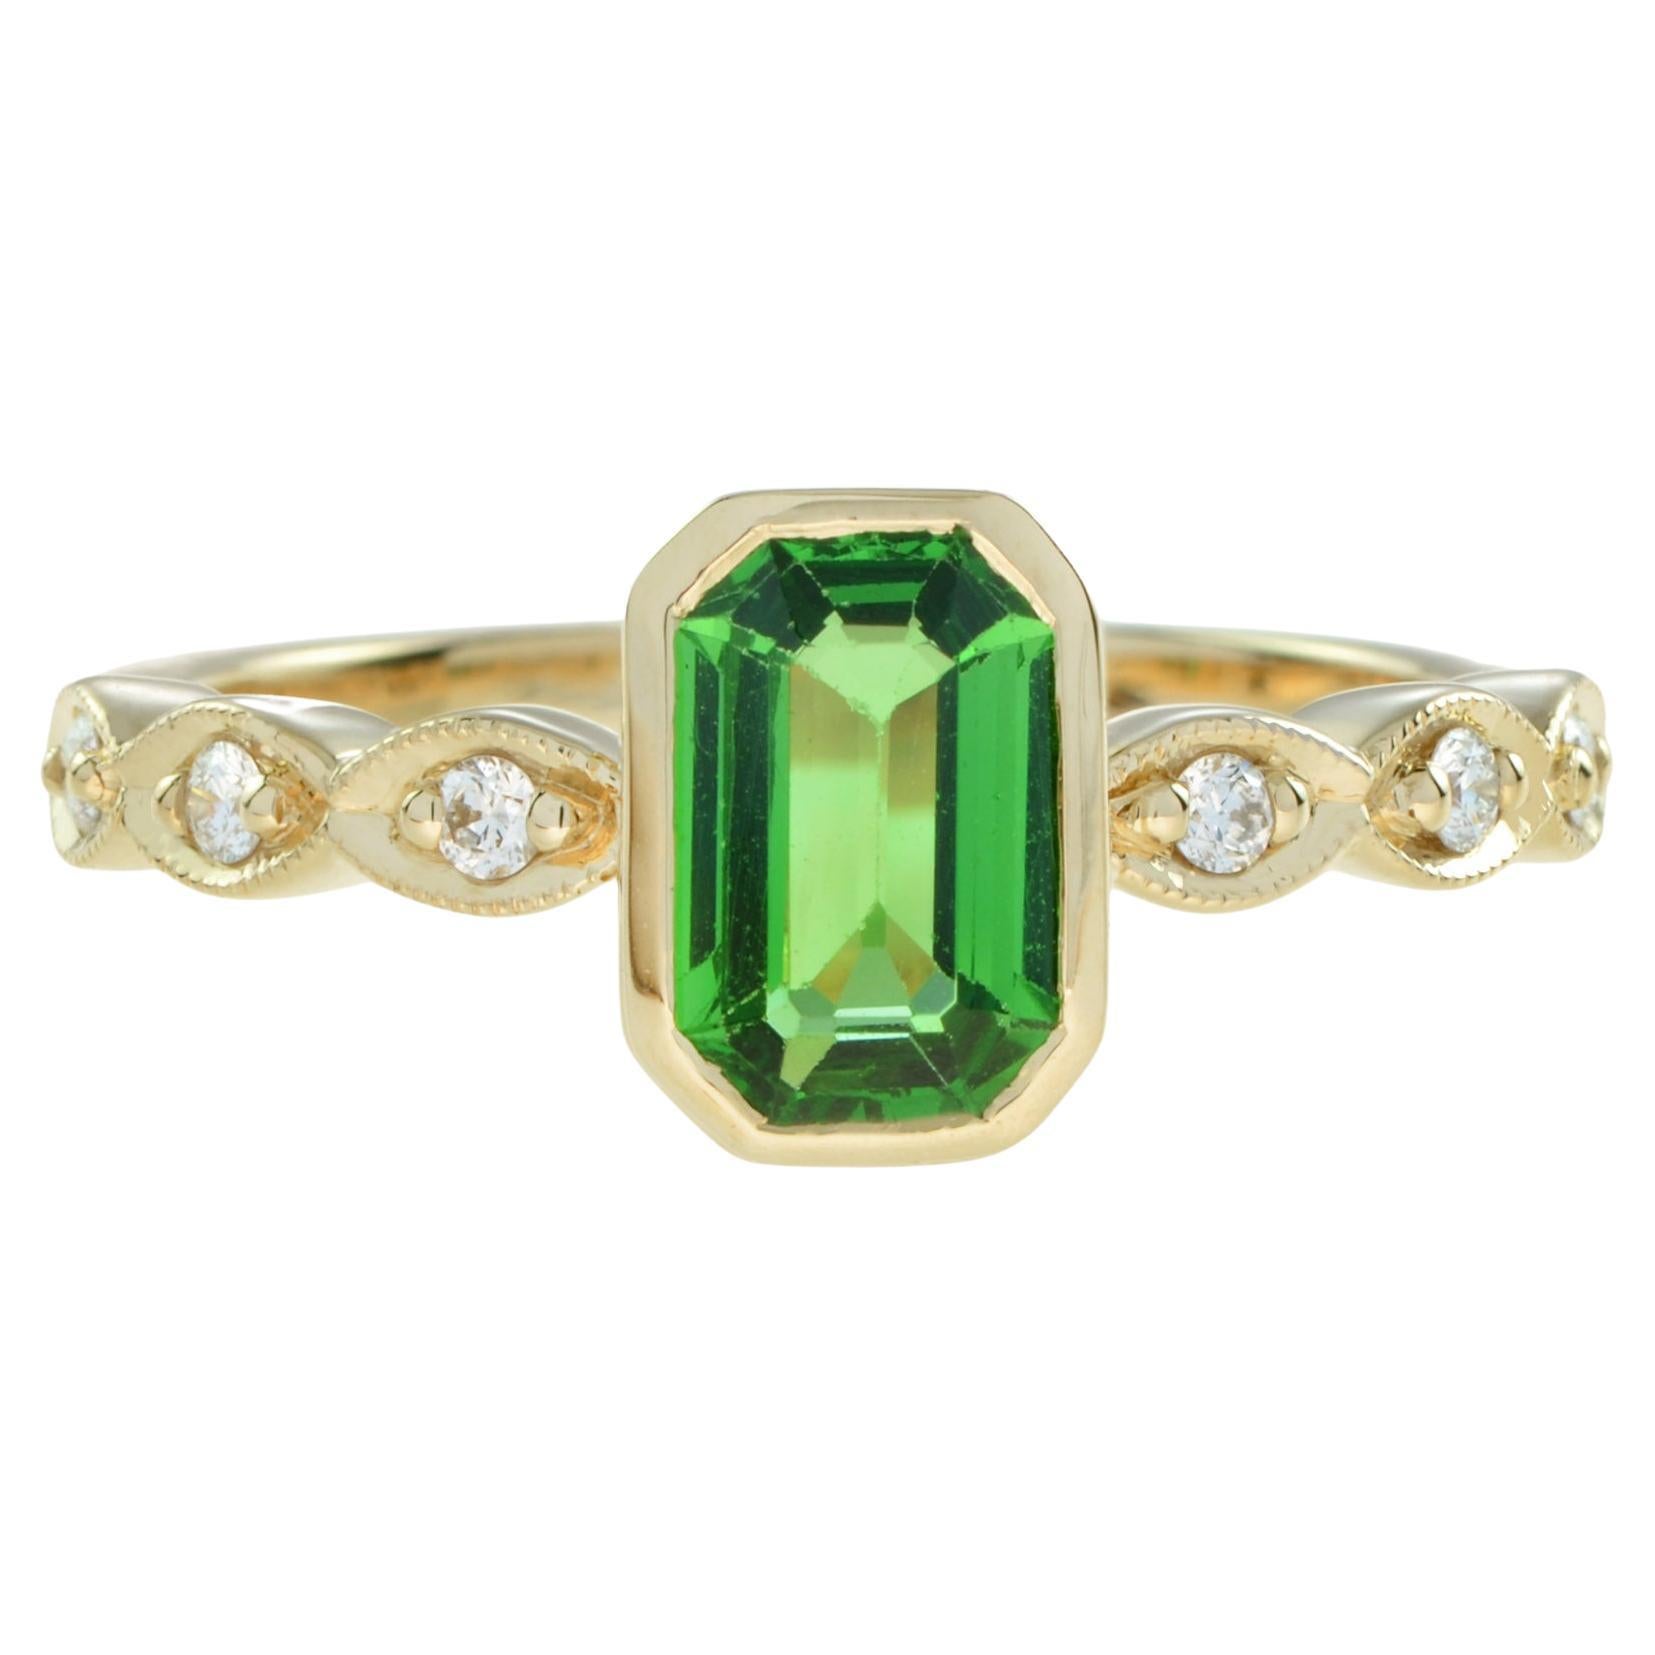 Certified Emerald Cut Tsavorite and Diamond Engagement Ring in 18K Yellow Gold